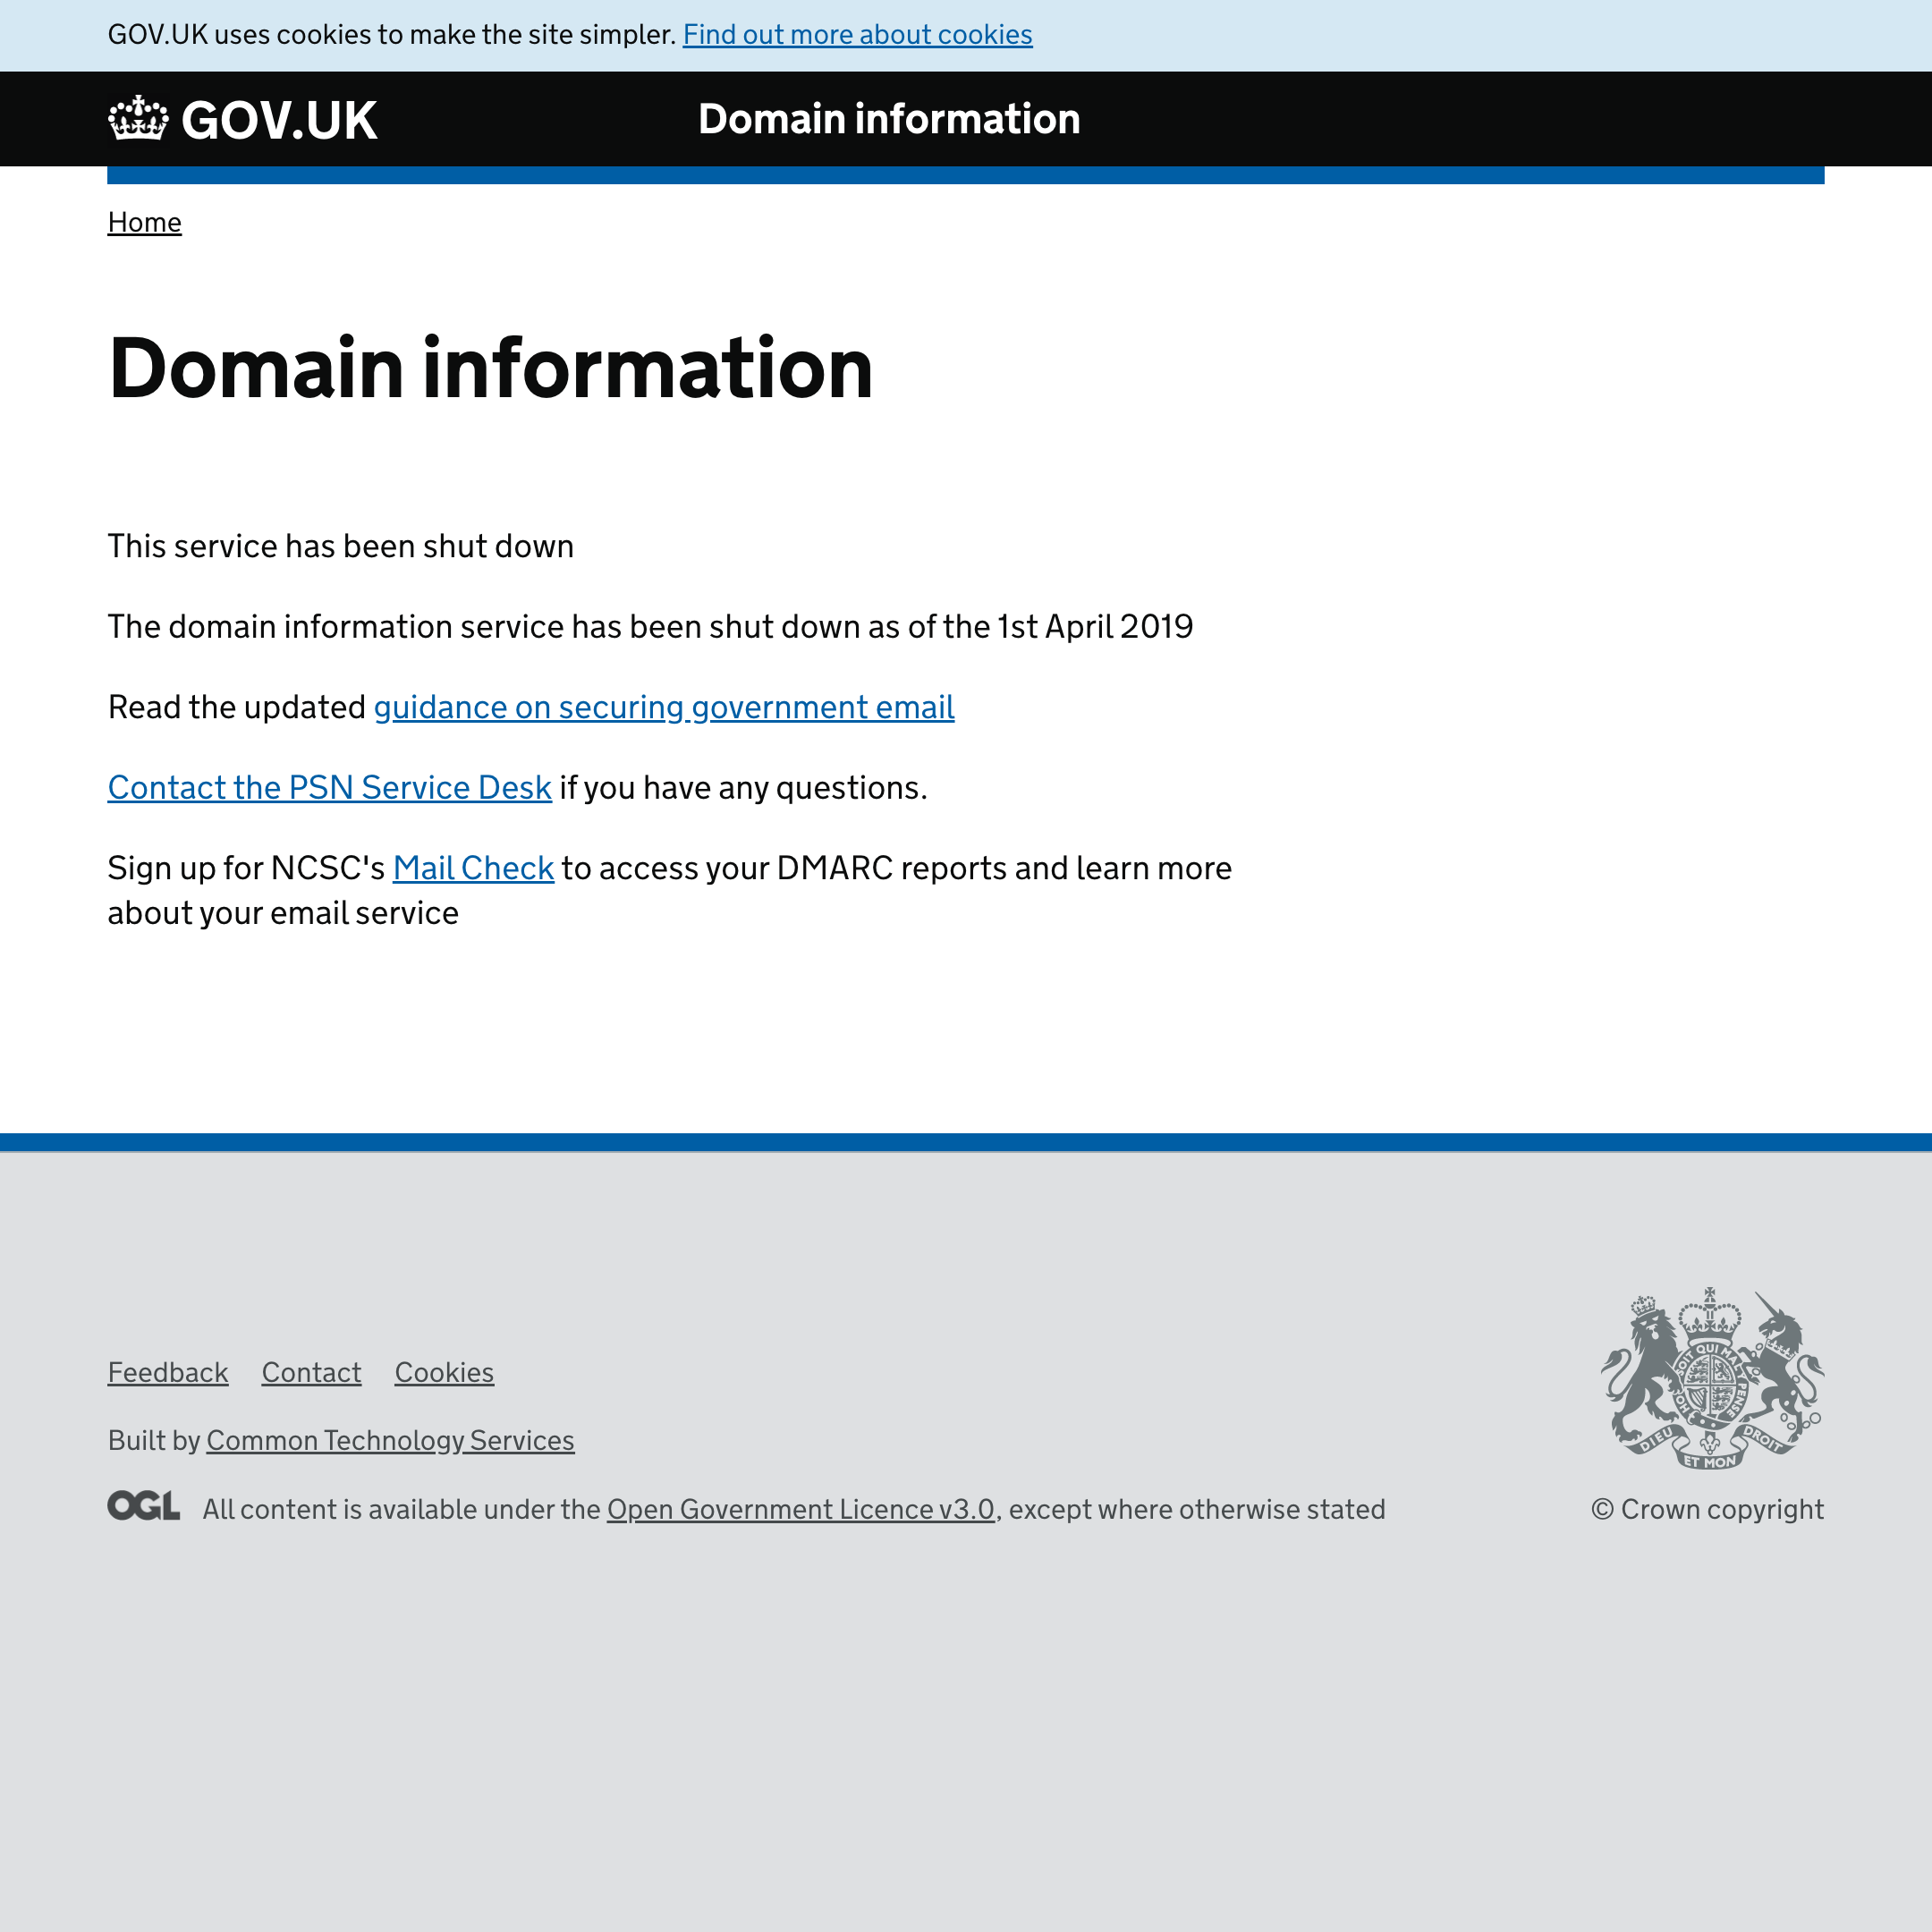 Domain information